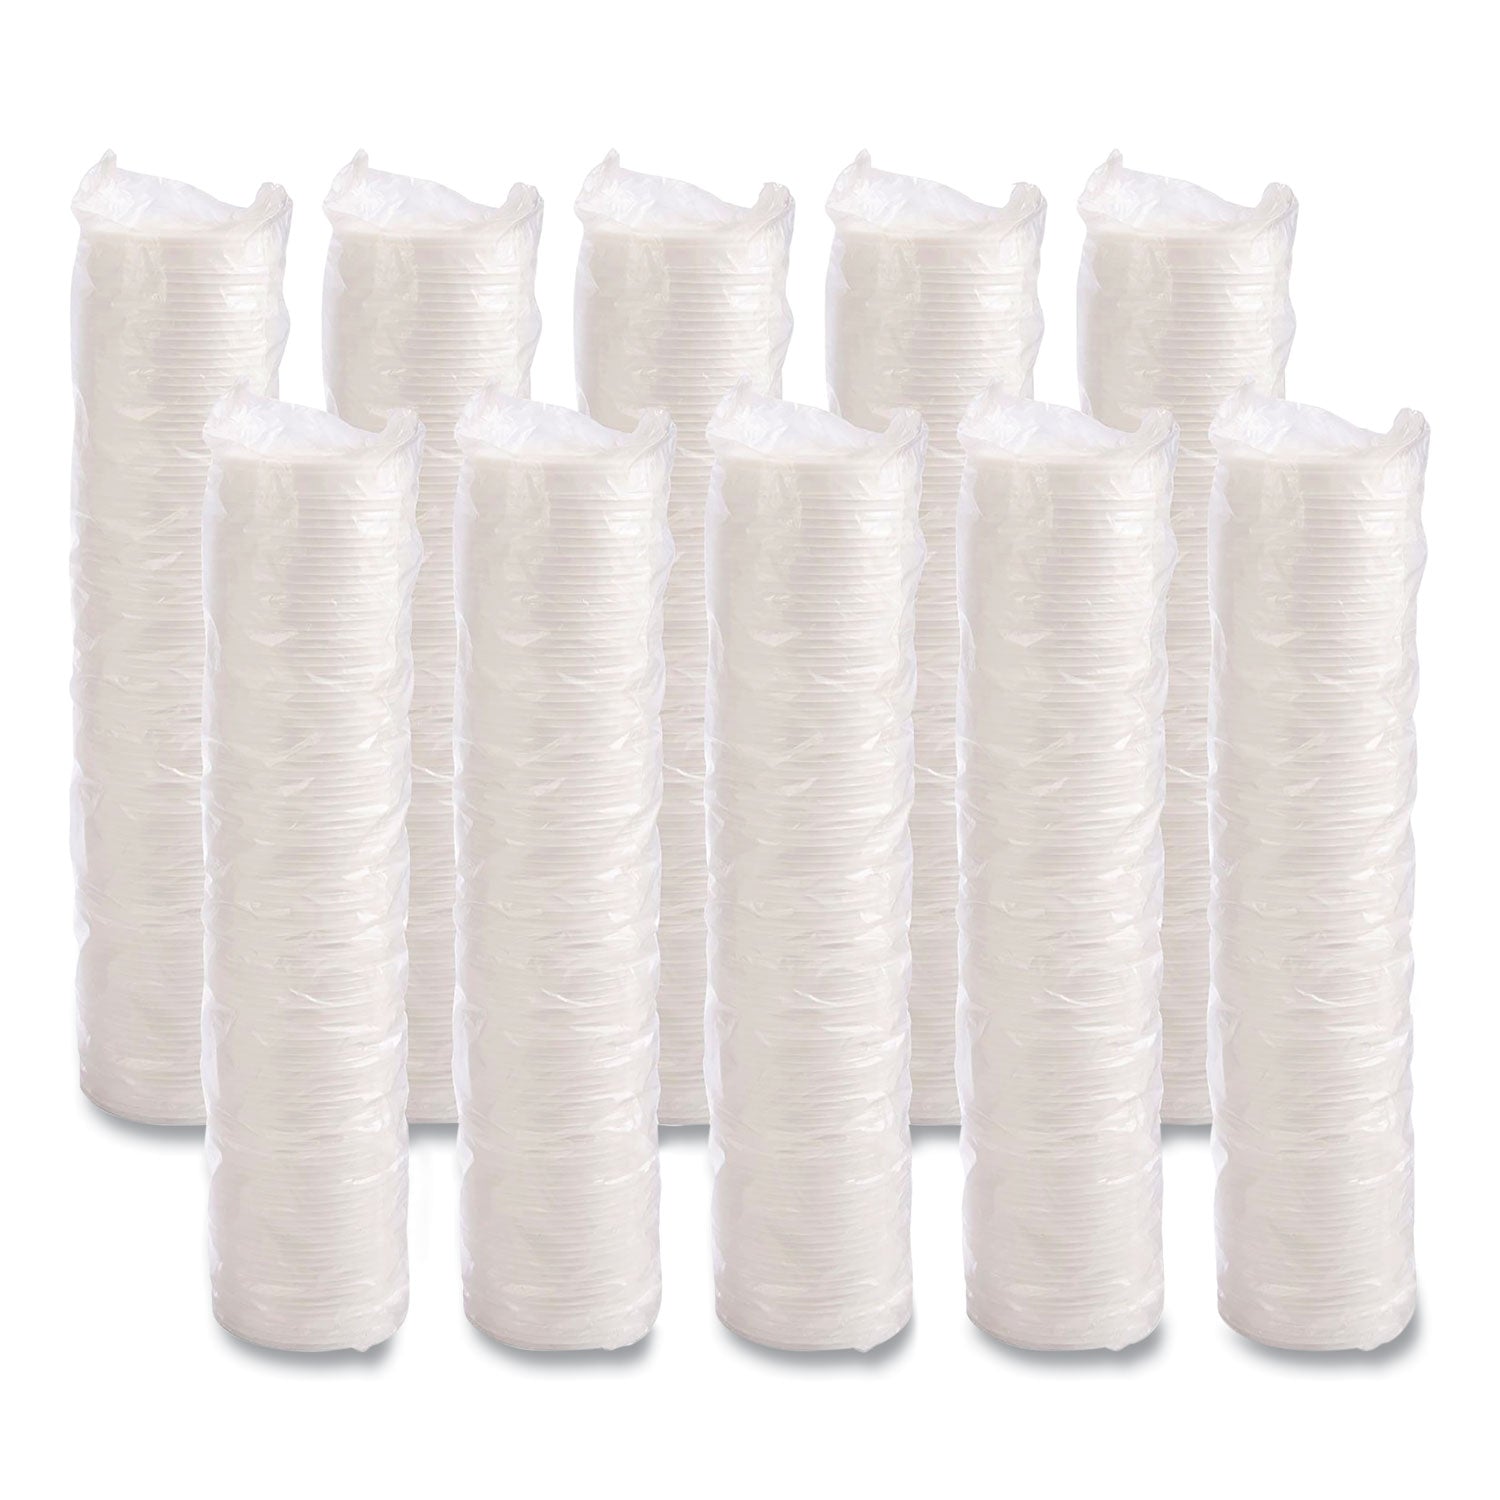 Sip Thru Lids, Fits 10 oz to 14 oz Foam Cups, Plastic, White, 100/Pack, 10 Packs/Carton - 